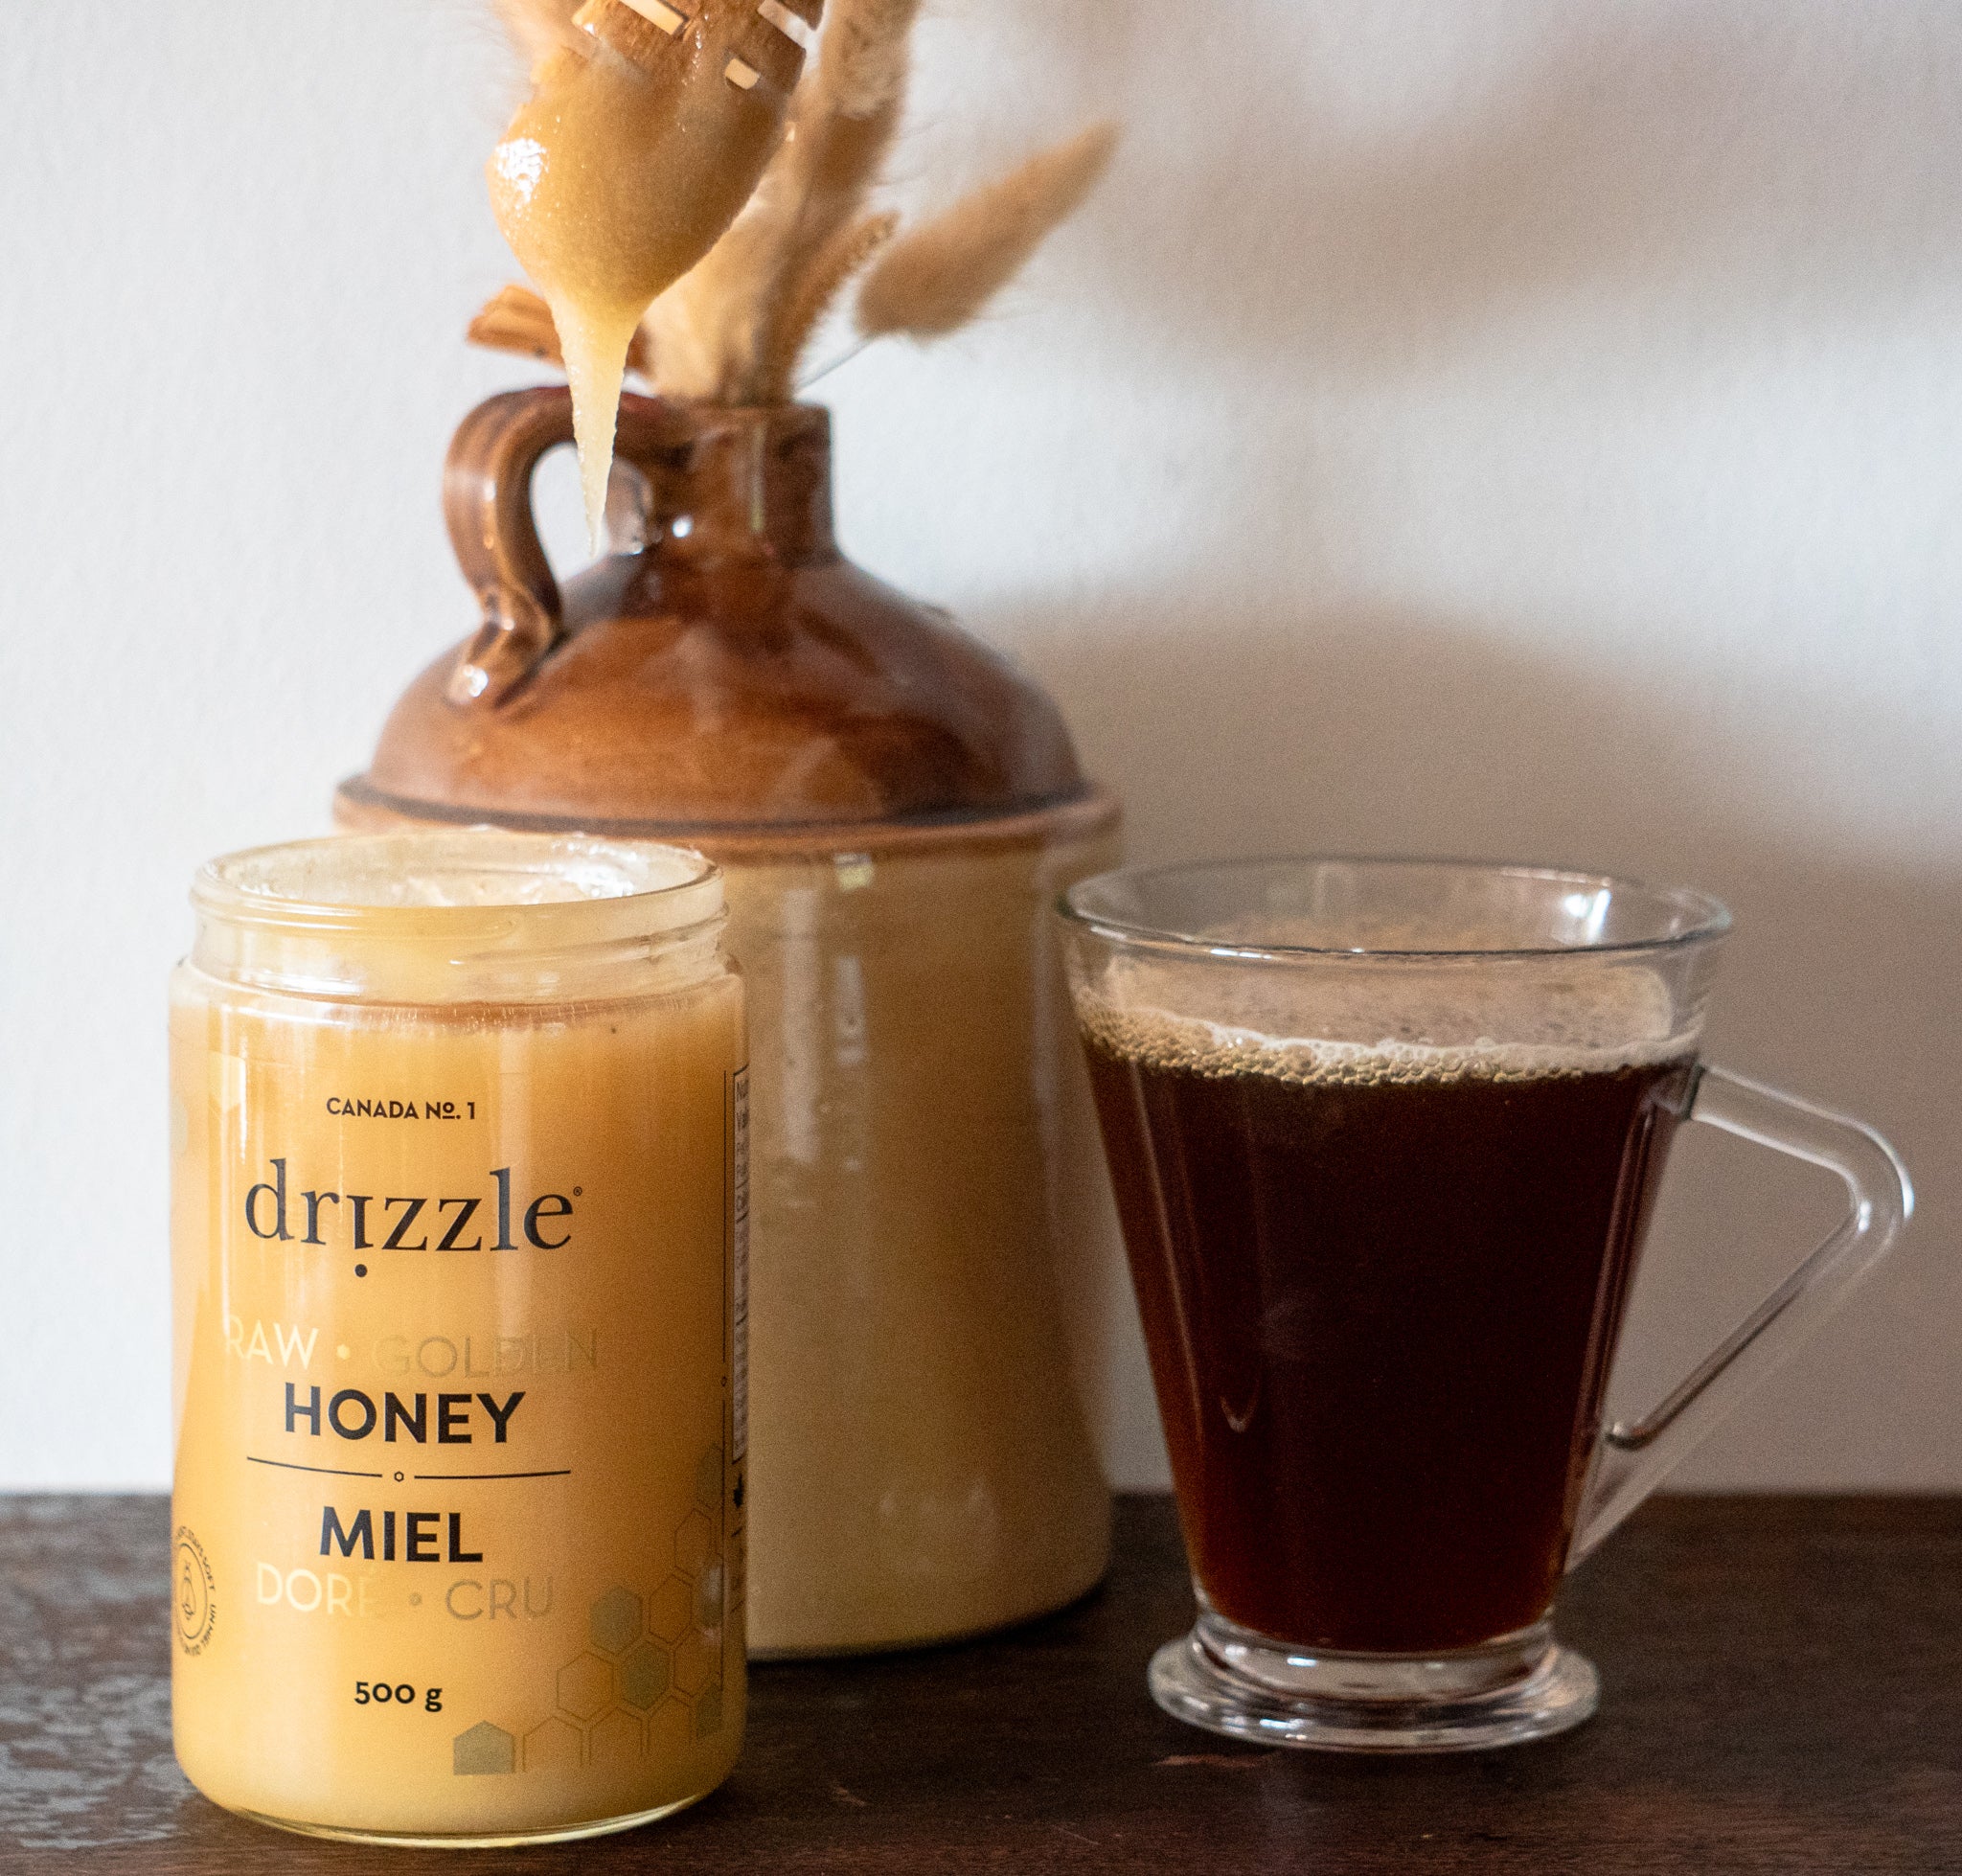 Drizzle Golden Raw Honey